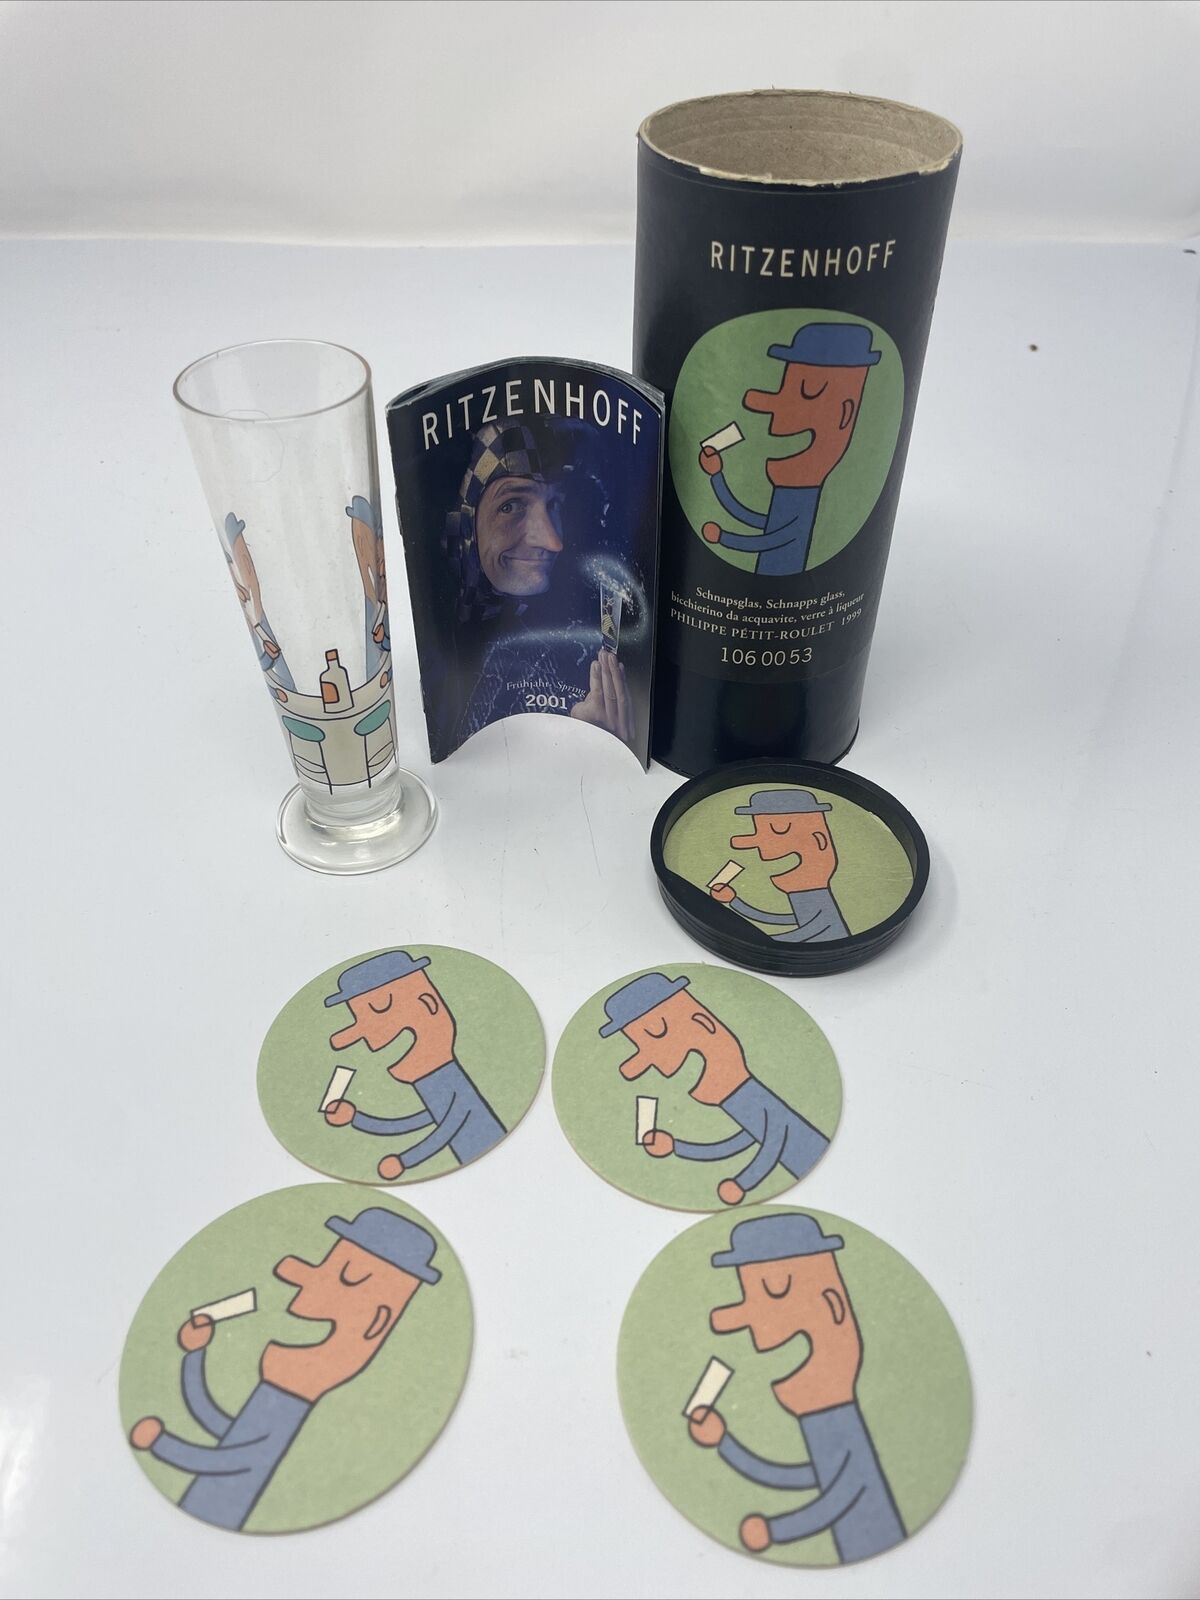 Vintage Ritzenhoff Schnapps Glass Philippe Petite-Roulet Box Coasters Man Drink